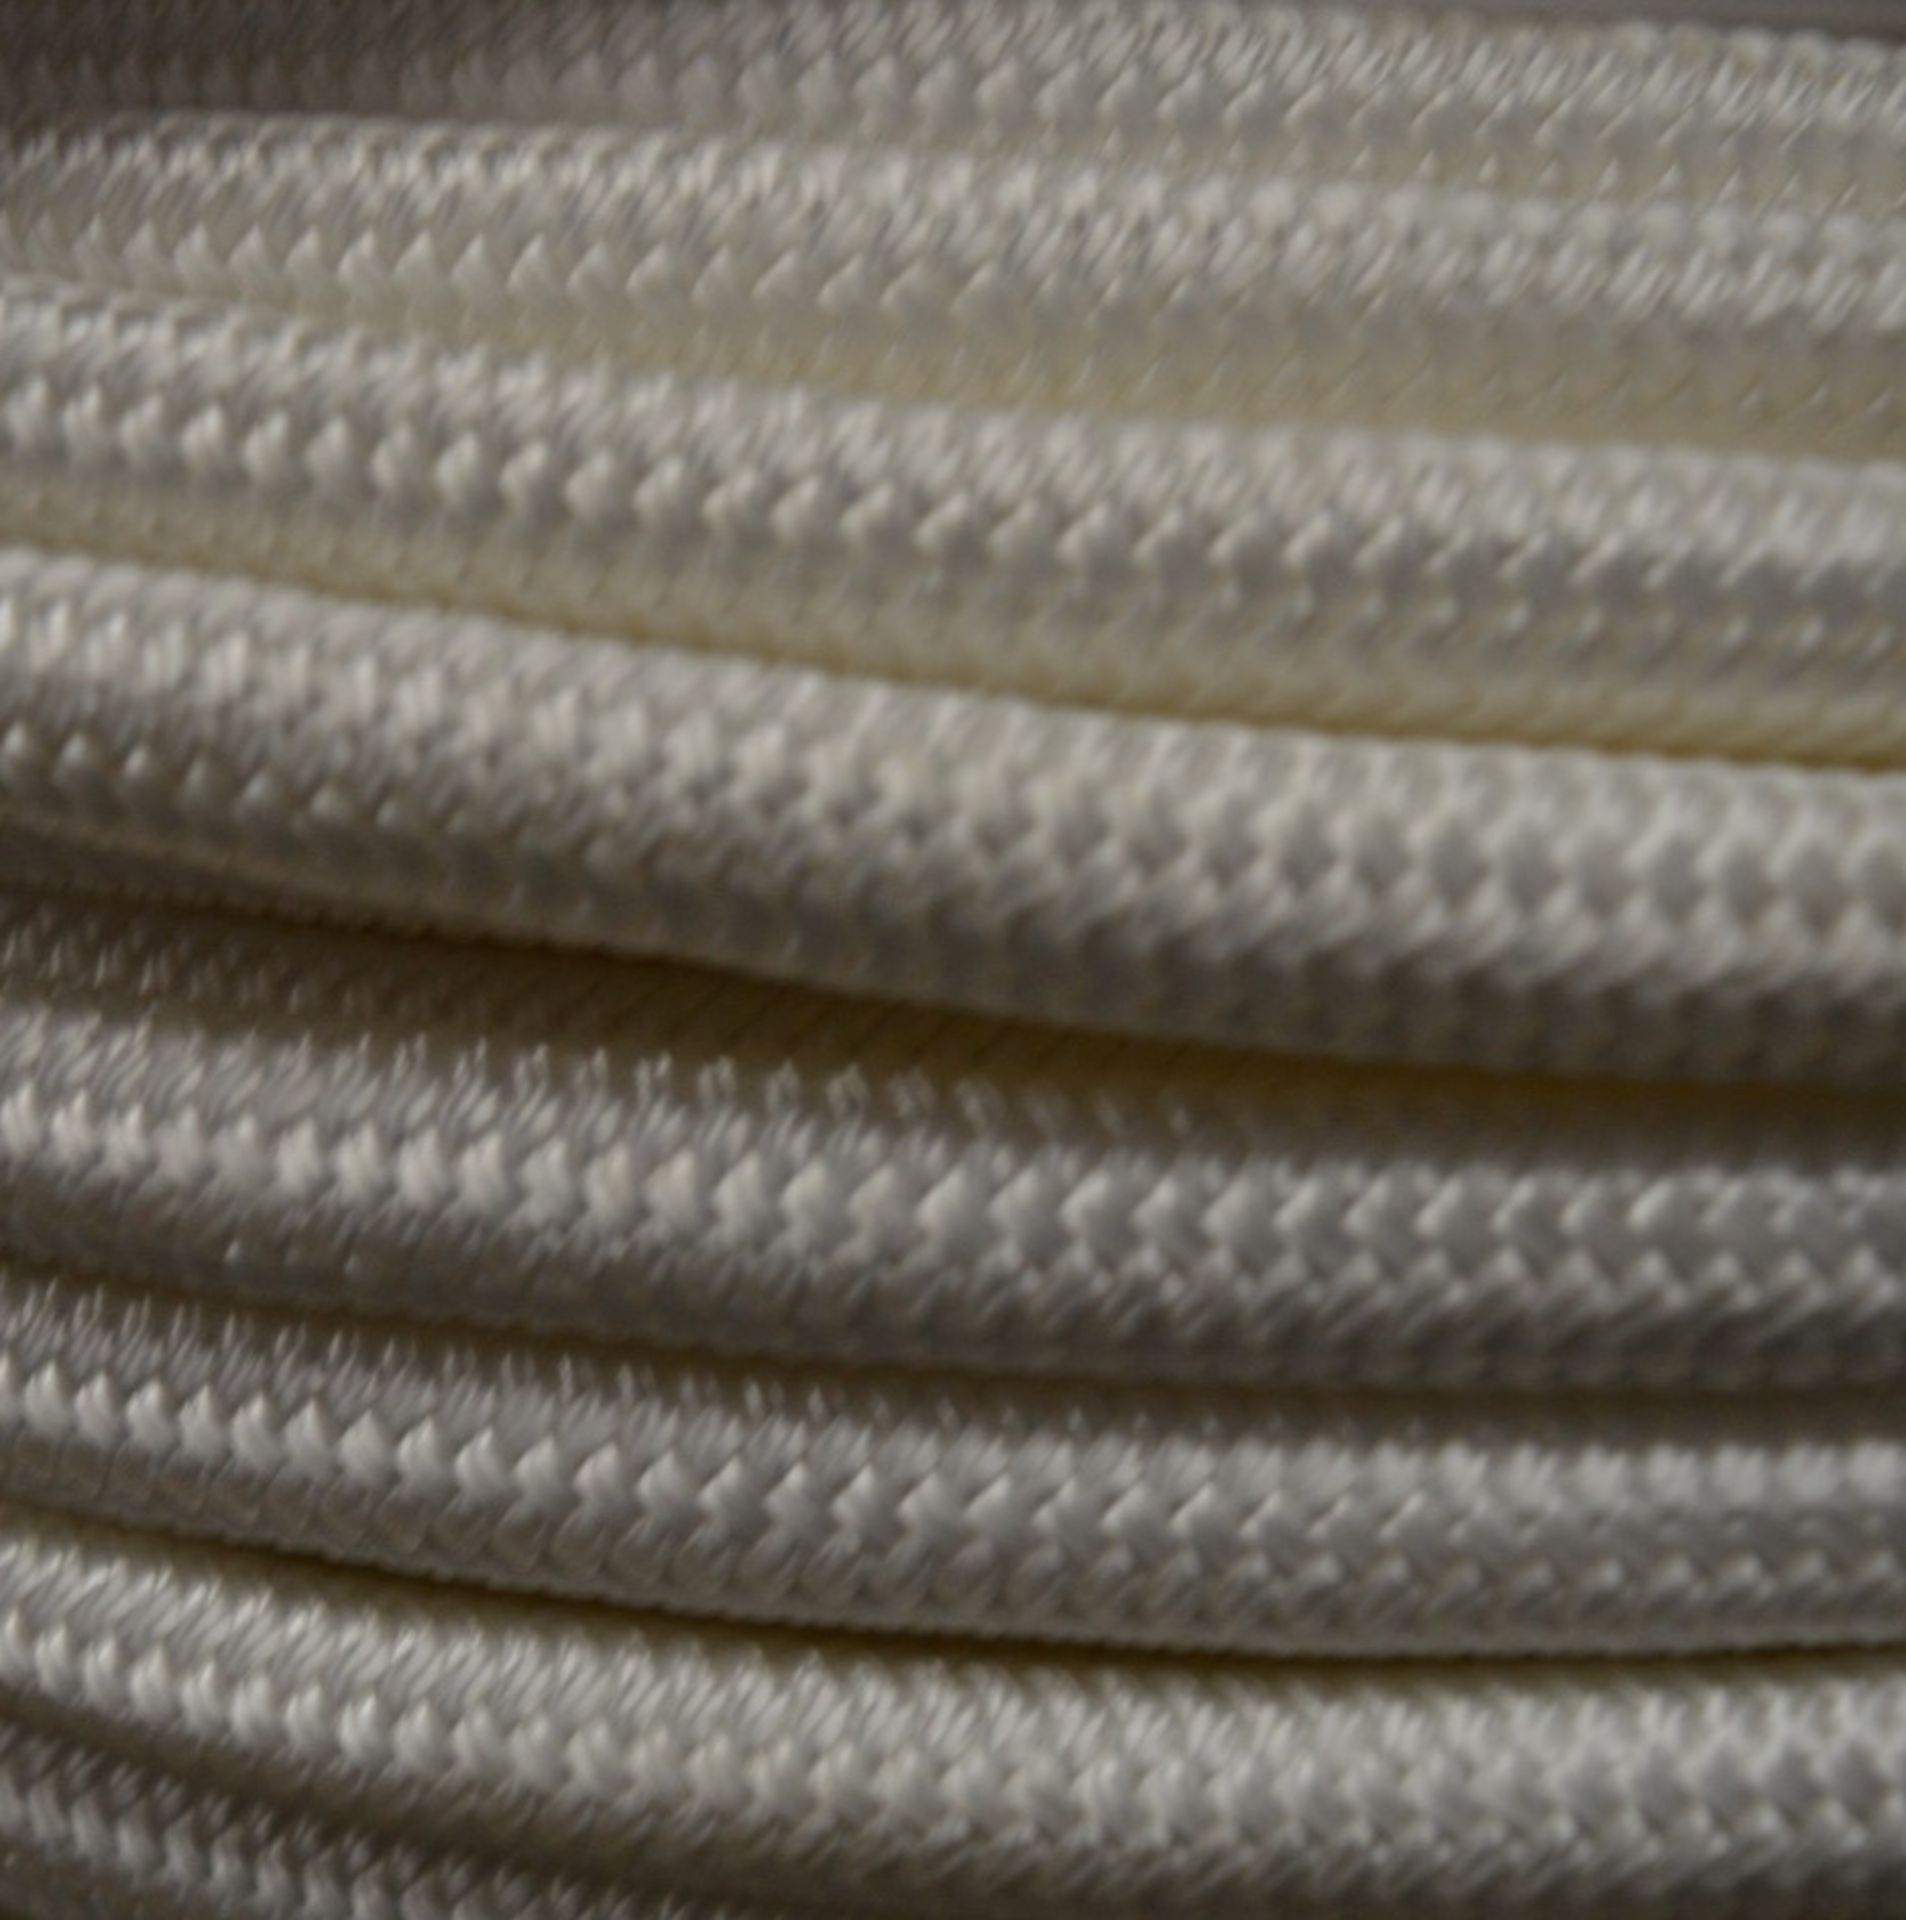 1 x Large Unused Bundle of Braid on Braid Rope - 12mm - Suitable For Various Applications - Image 3 of 6